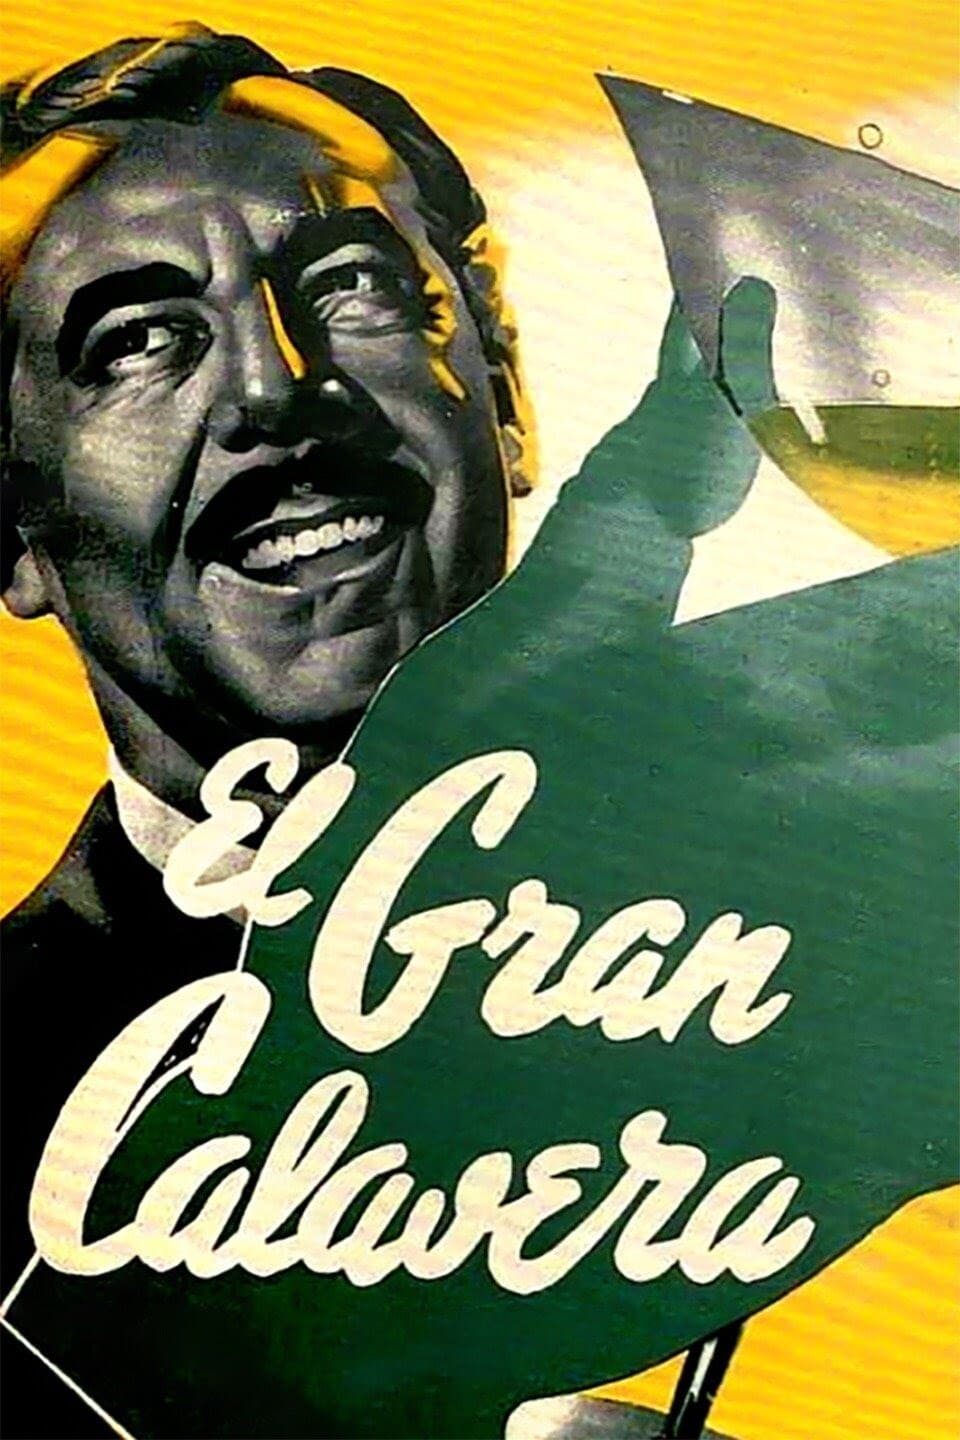 Der große Lebemann (1949)